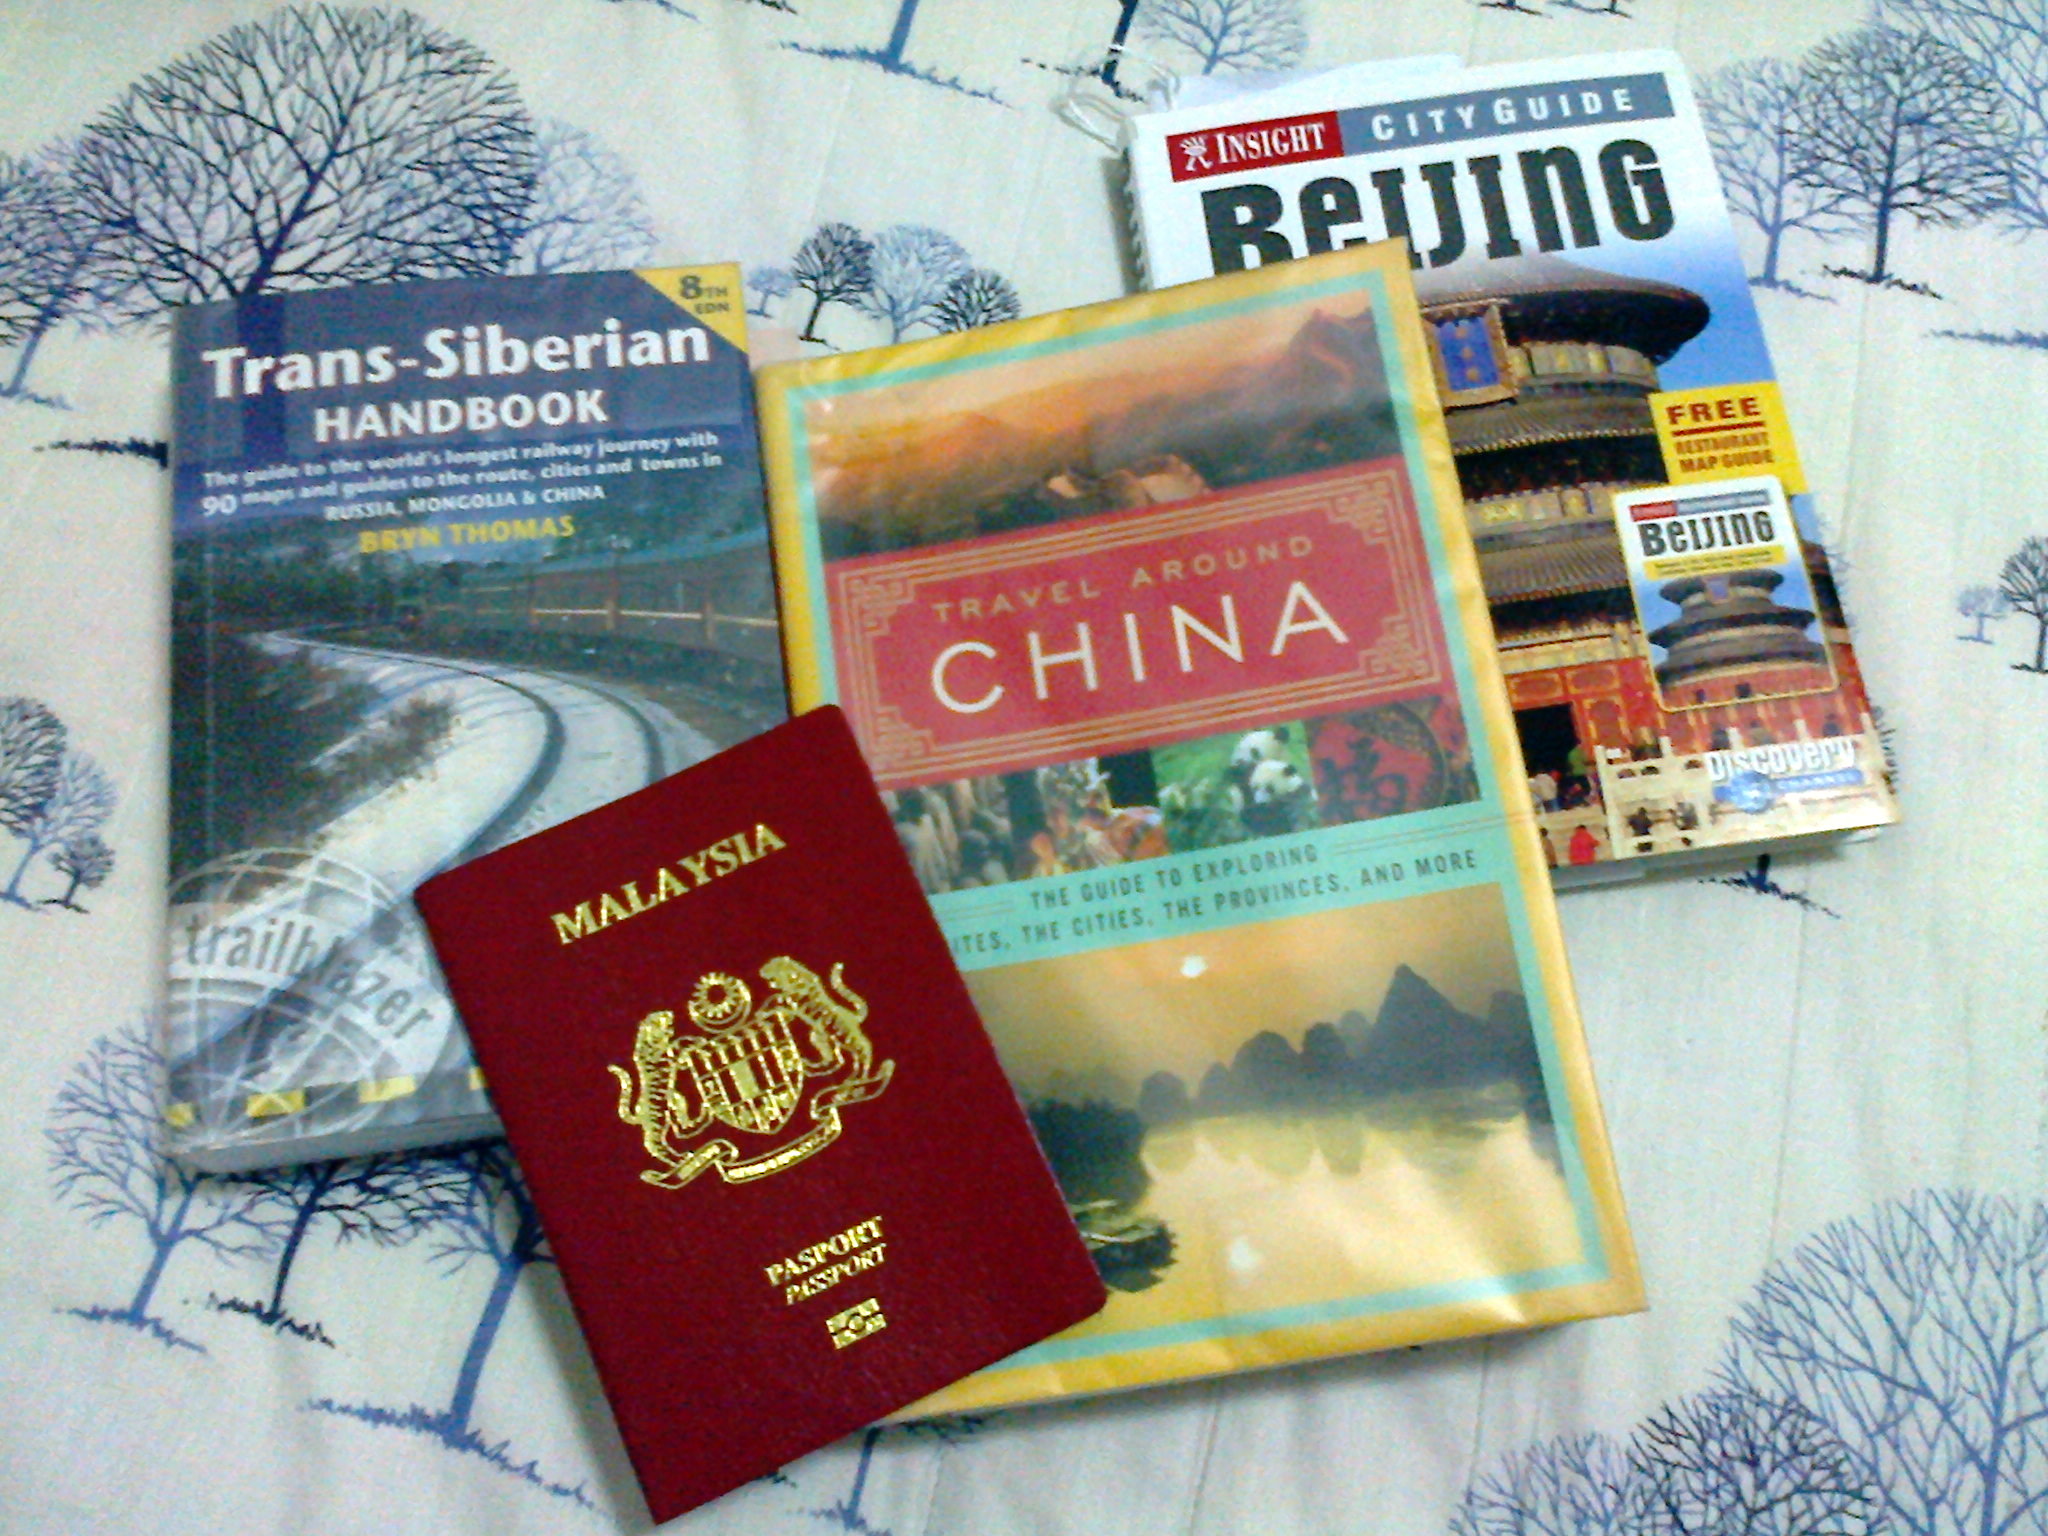 chinese visa application australian passport